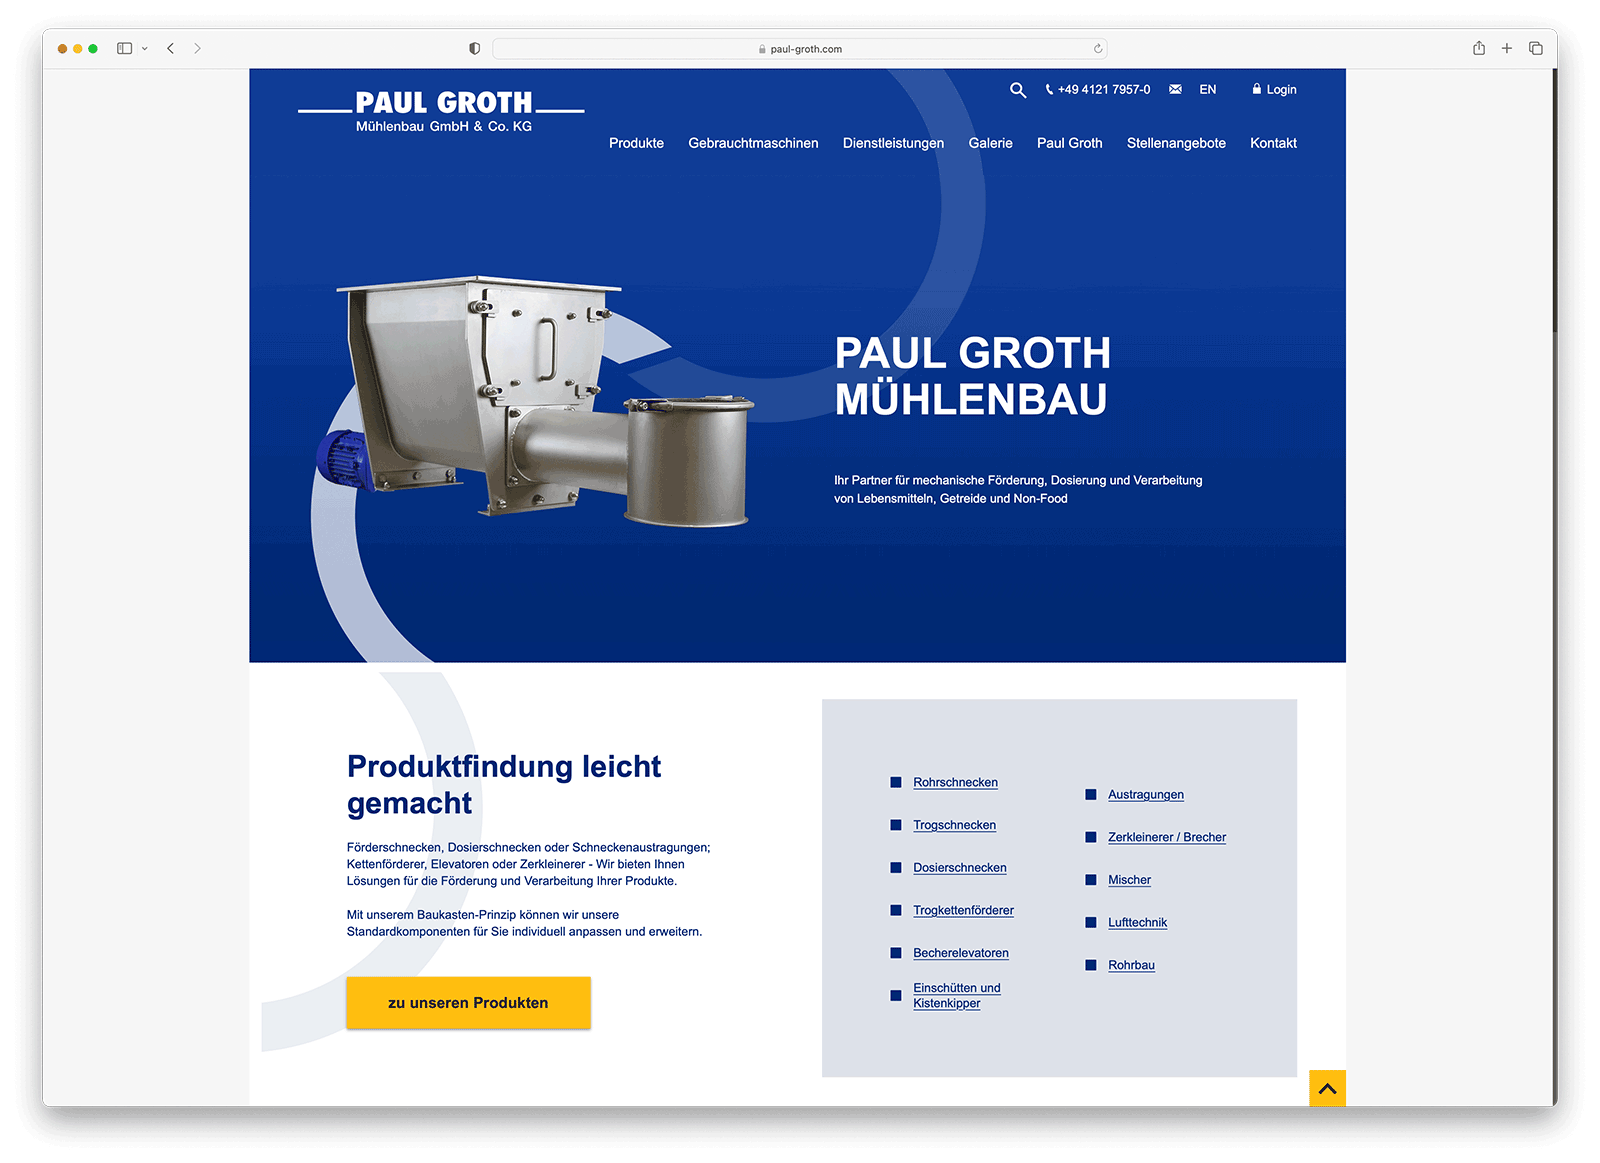 PAUL GROTH Mühlenbau – Redesign